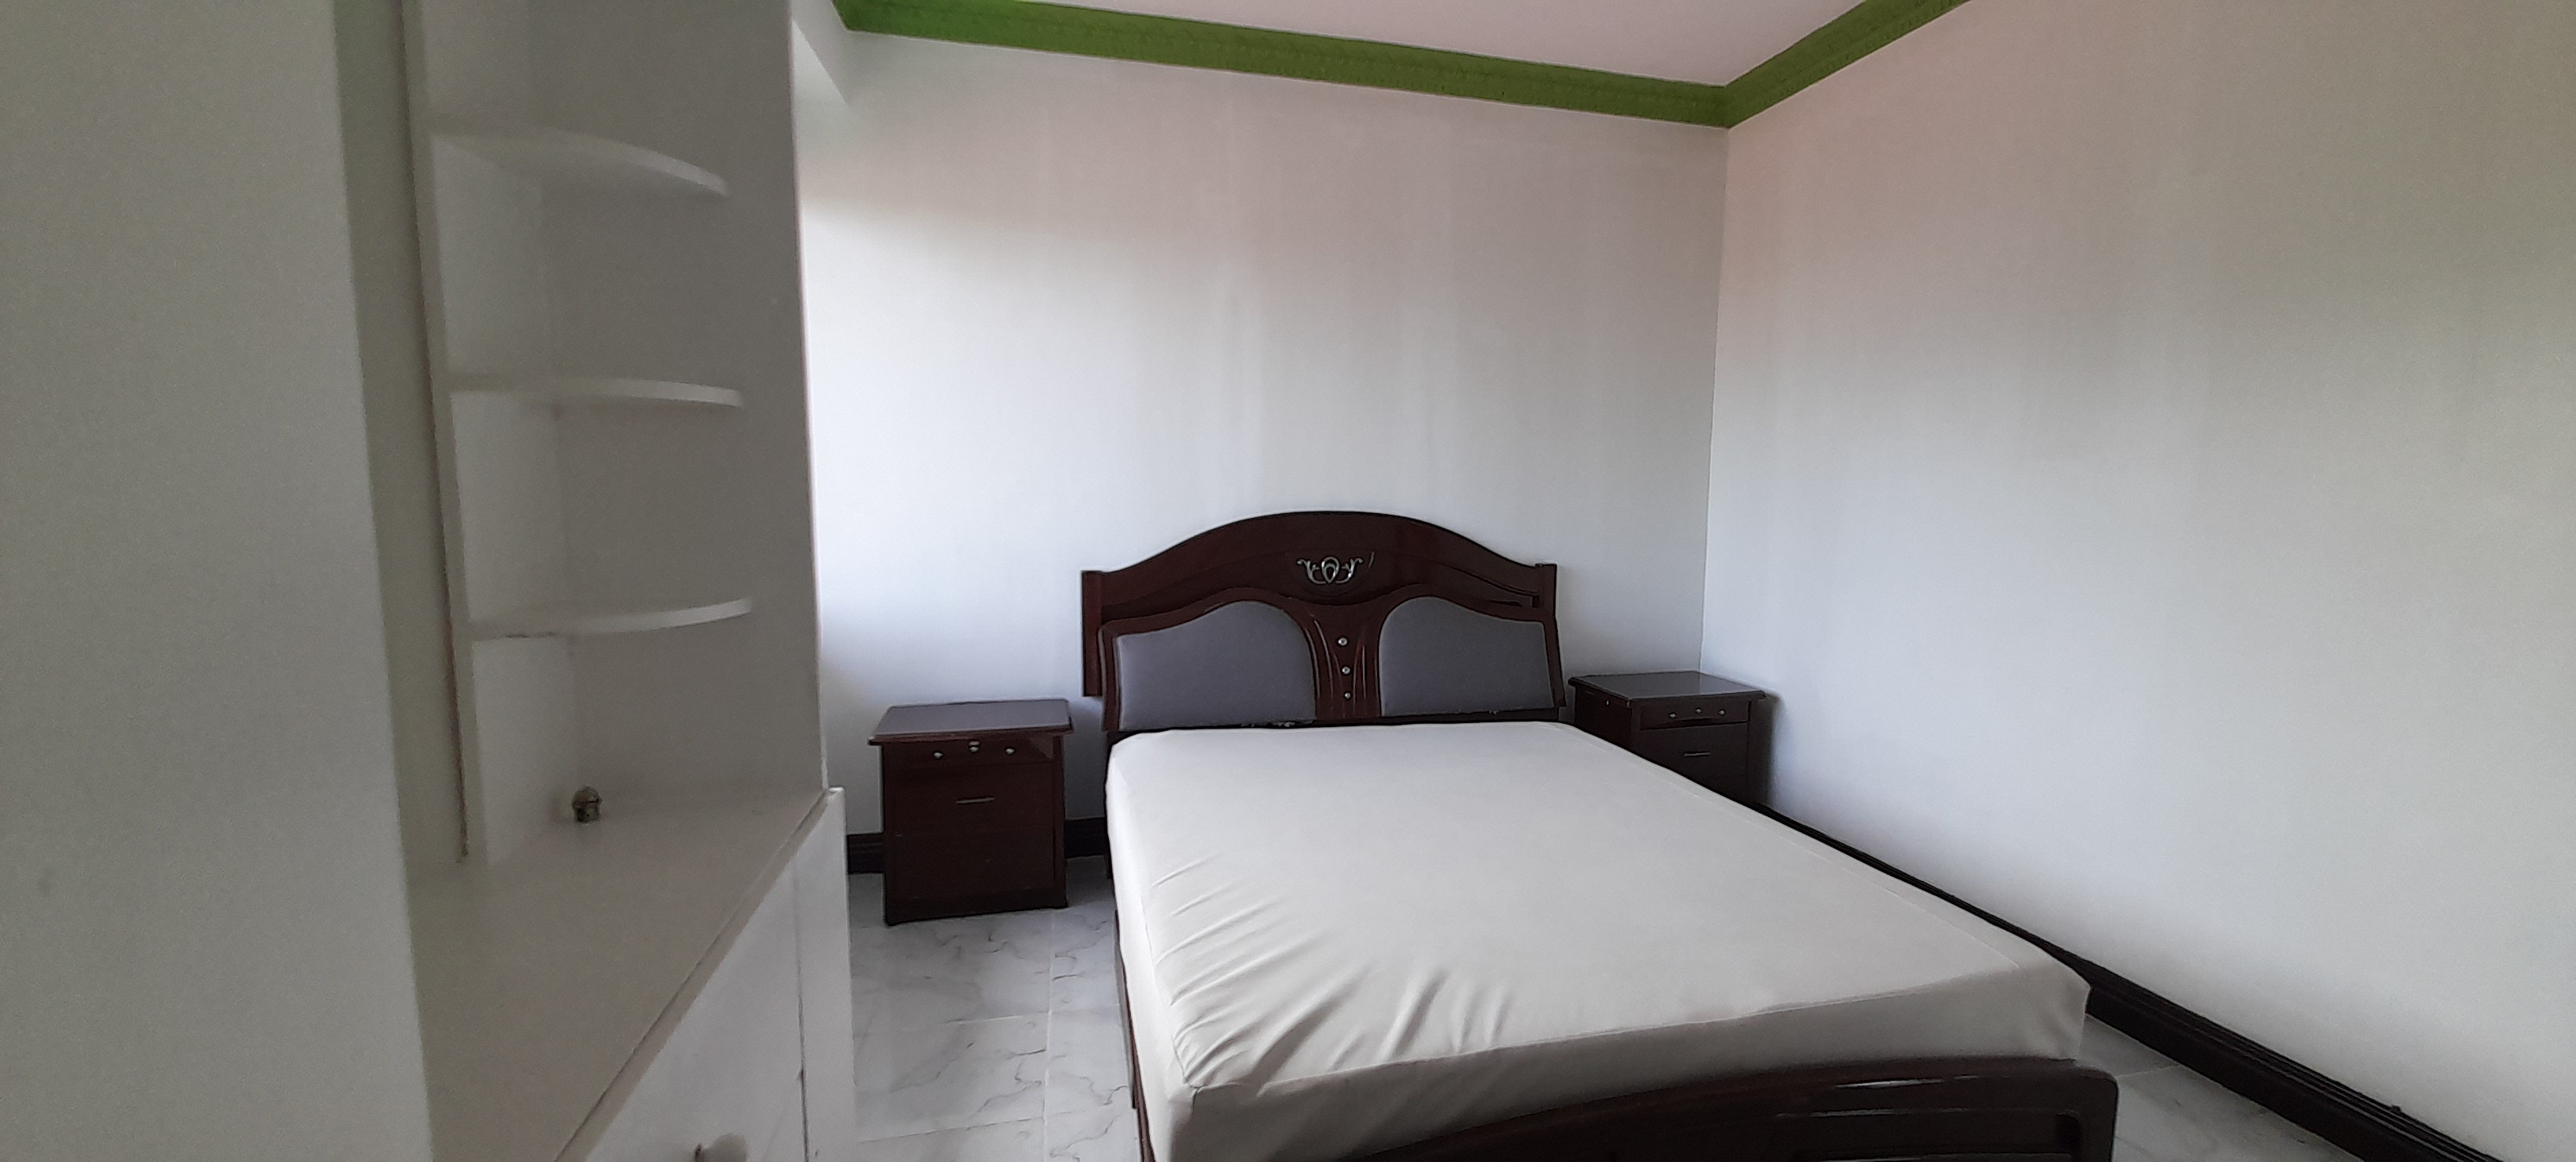 2-bedroom-furnished-apartment-for-rent-in-banawa-cebu-city-near-mcdonald